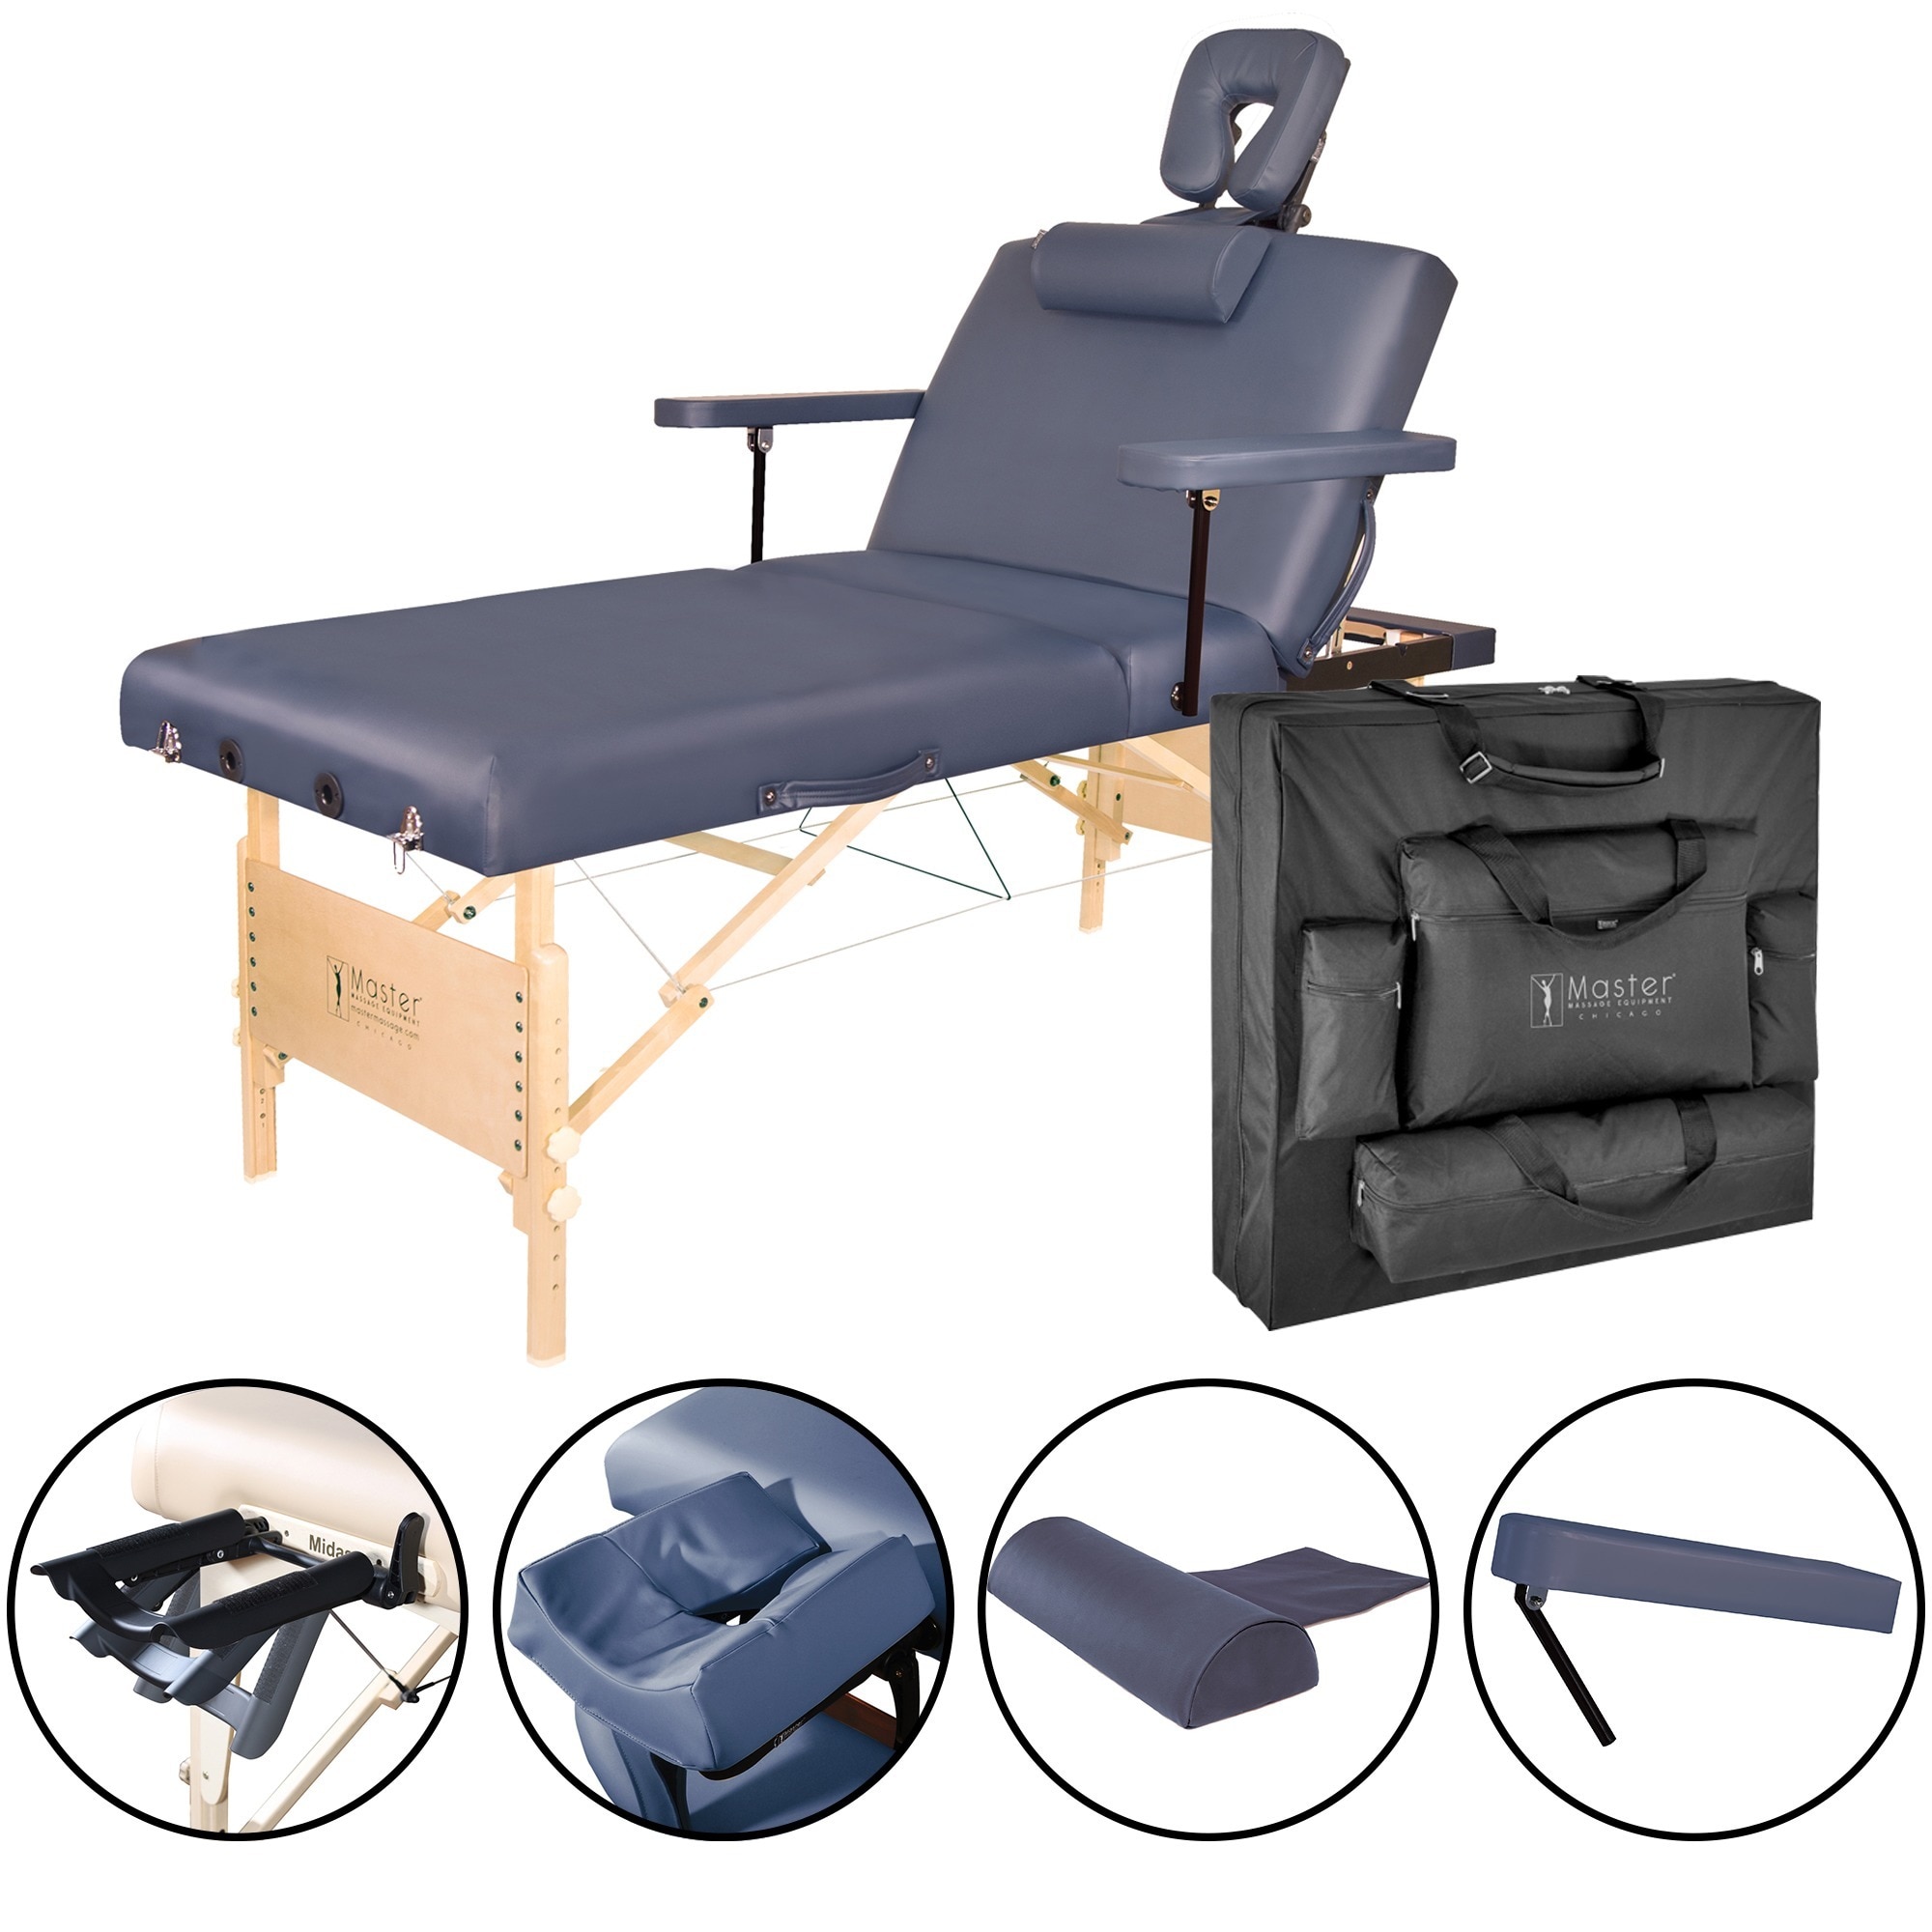 Master Massage 31 inch Coronado Salon Lx Massage Table Package